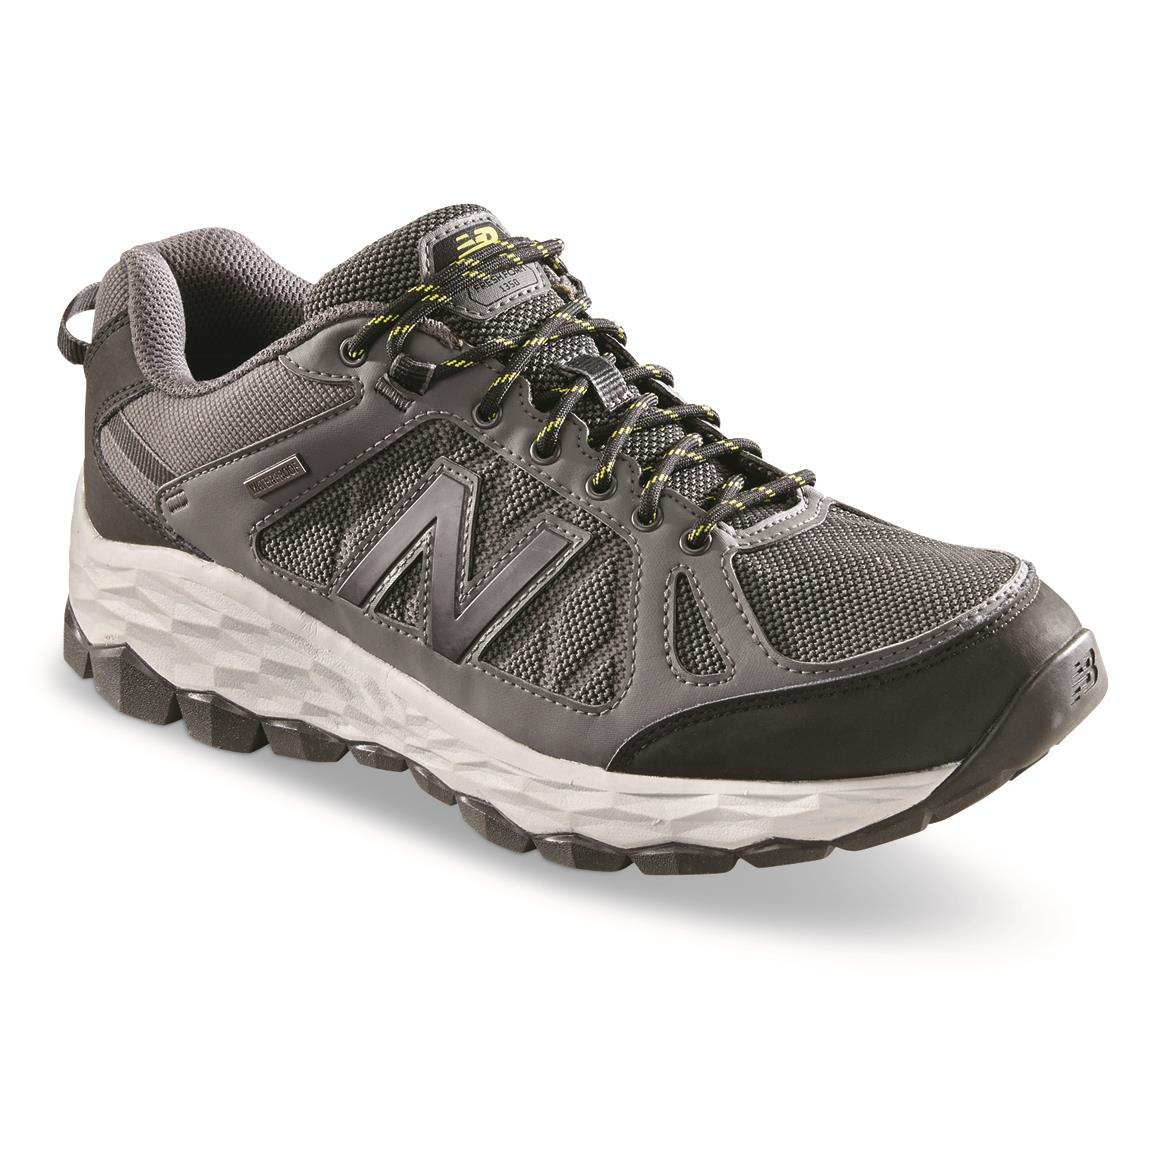 New Balance Men's 1350 Waterproof Trail Walking Shoes - 704881, Running ...